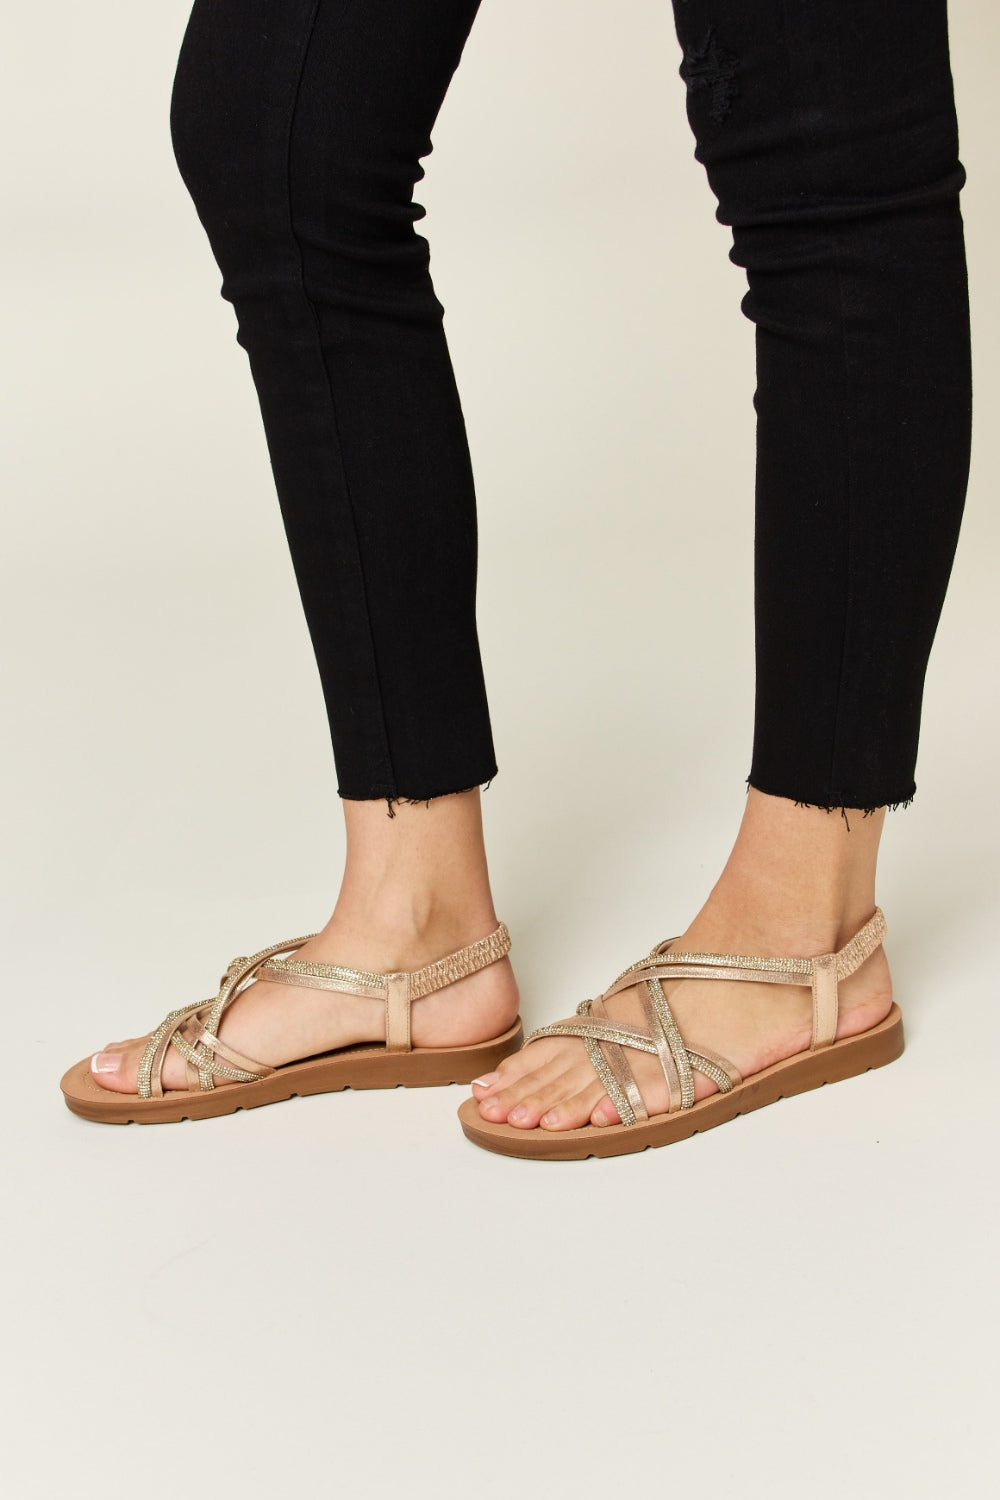 Rhinestone Crisscross Sandals